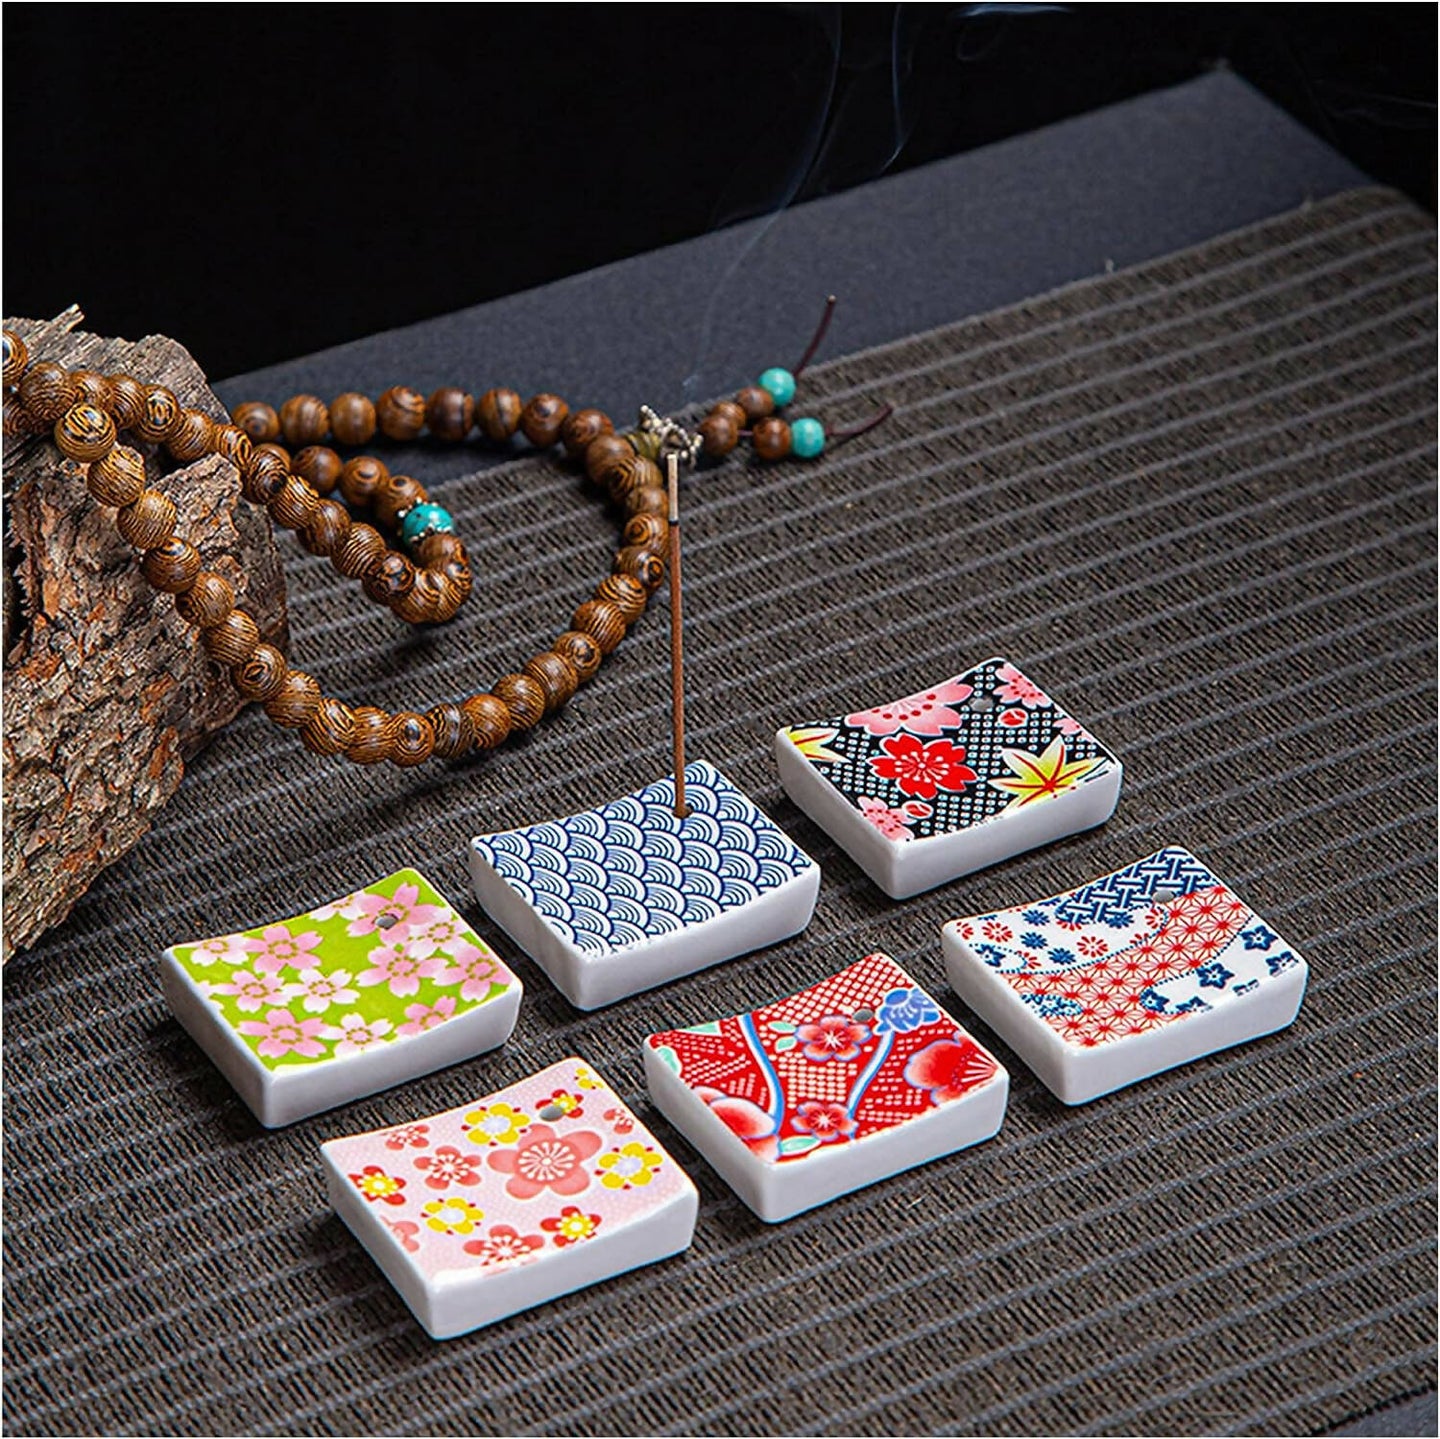 Japanese Ceramic Incense Holder Set - 6 Rectangular Burners for Relaxing Aromatherapy